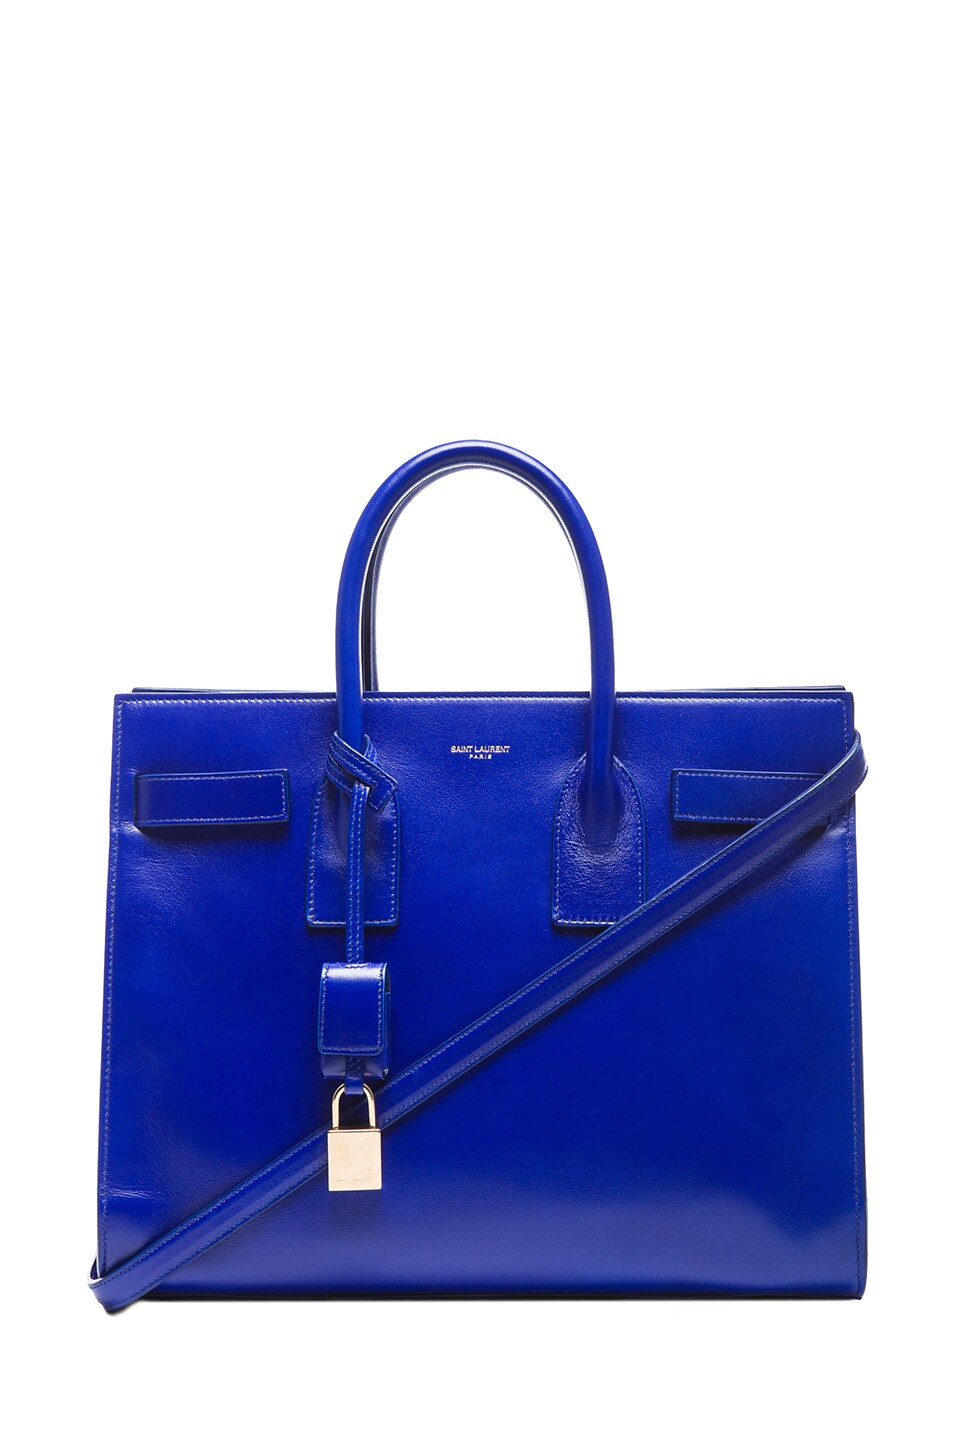 Image 1 of Saint Laurent Small Sac De Jour Carryall Bag in Neon Blue